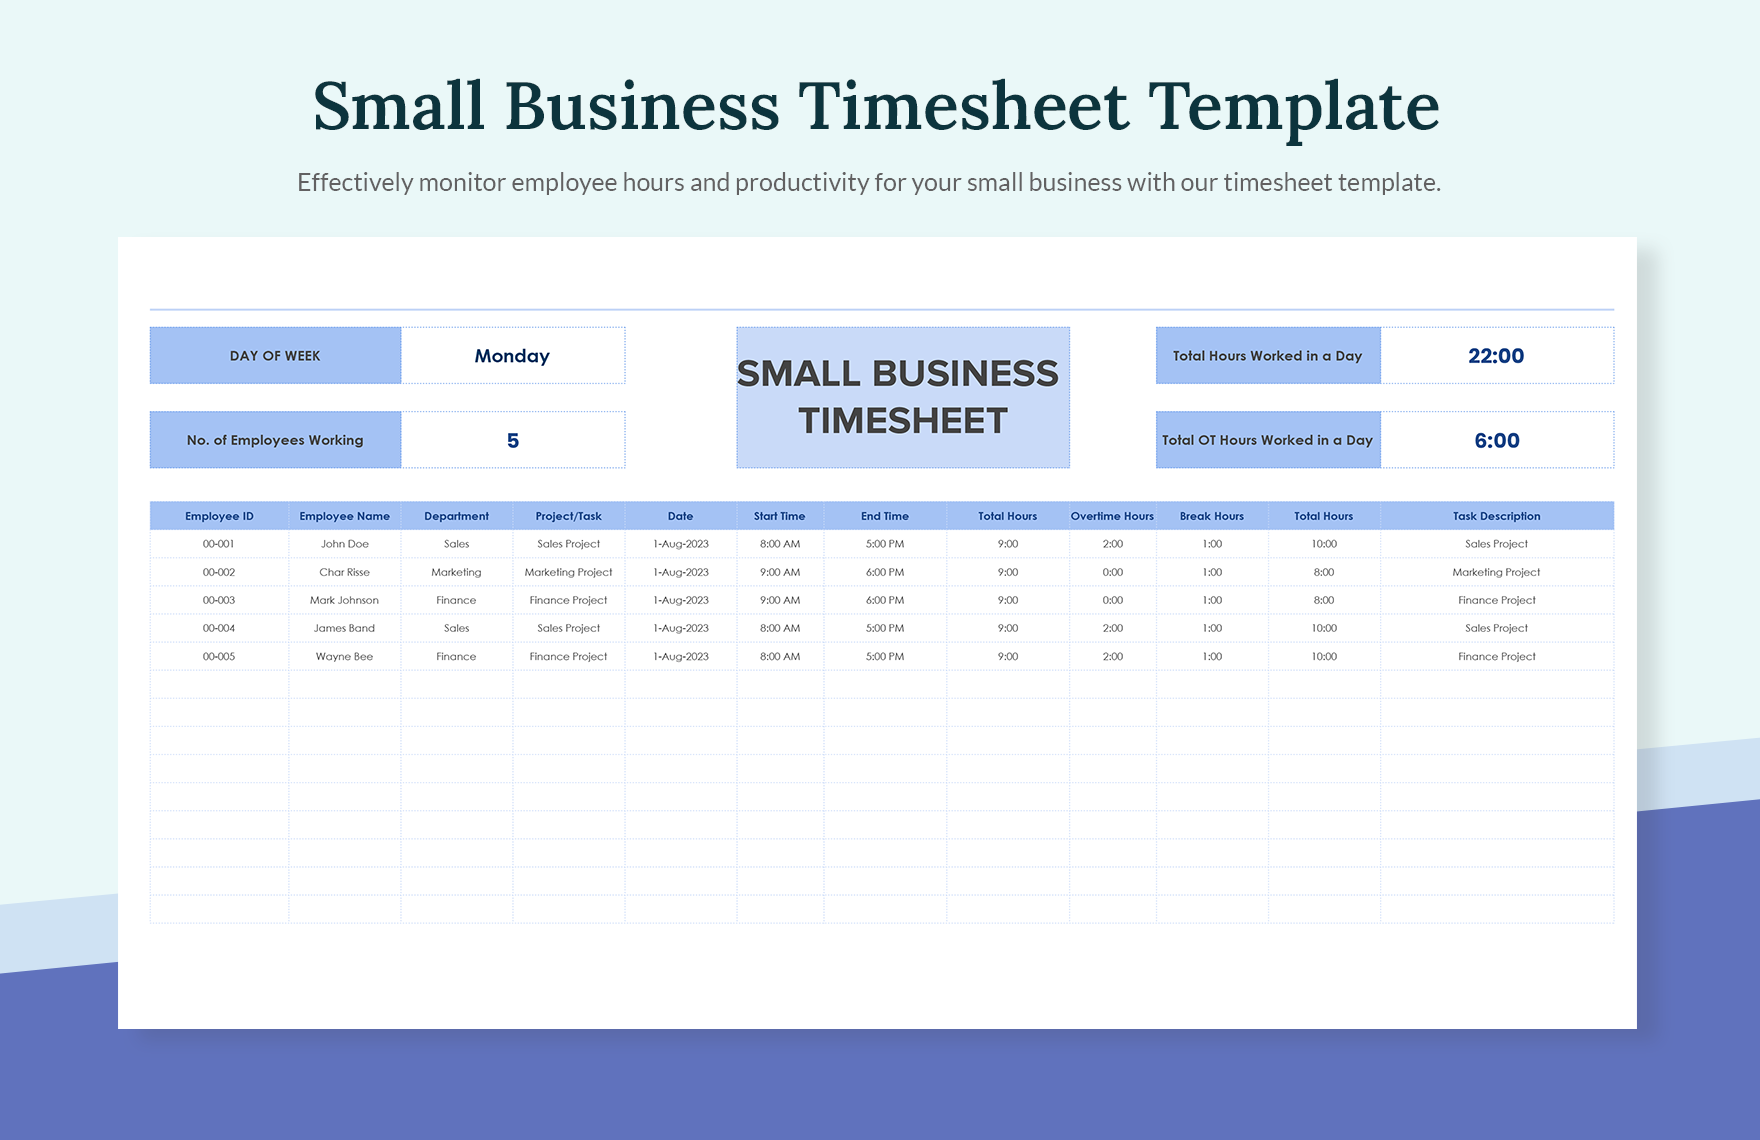 Small Business Timesheet Template